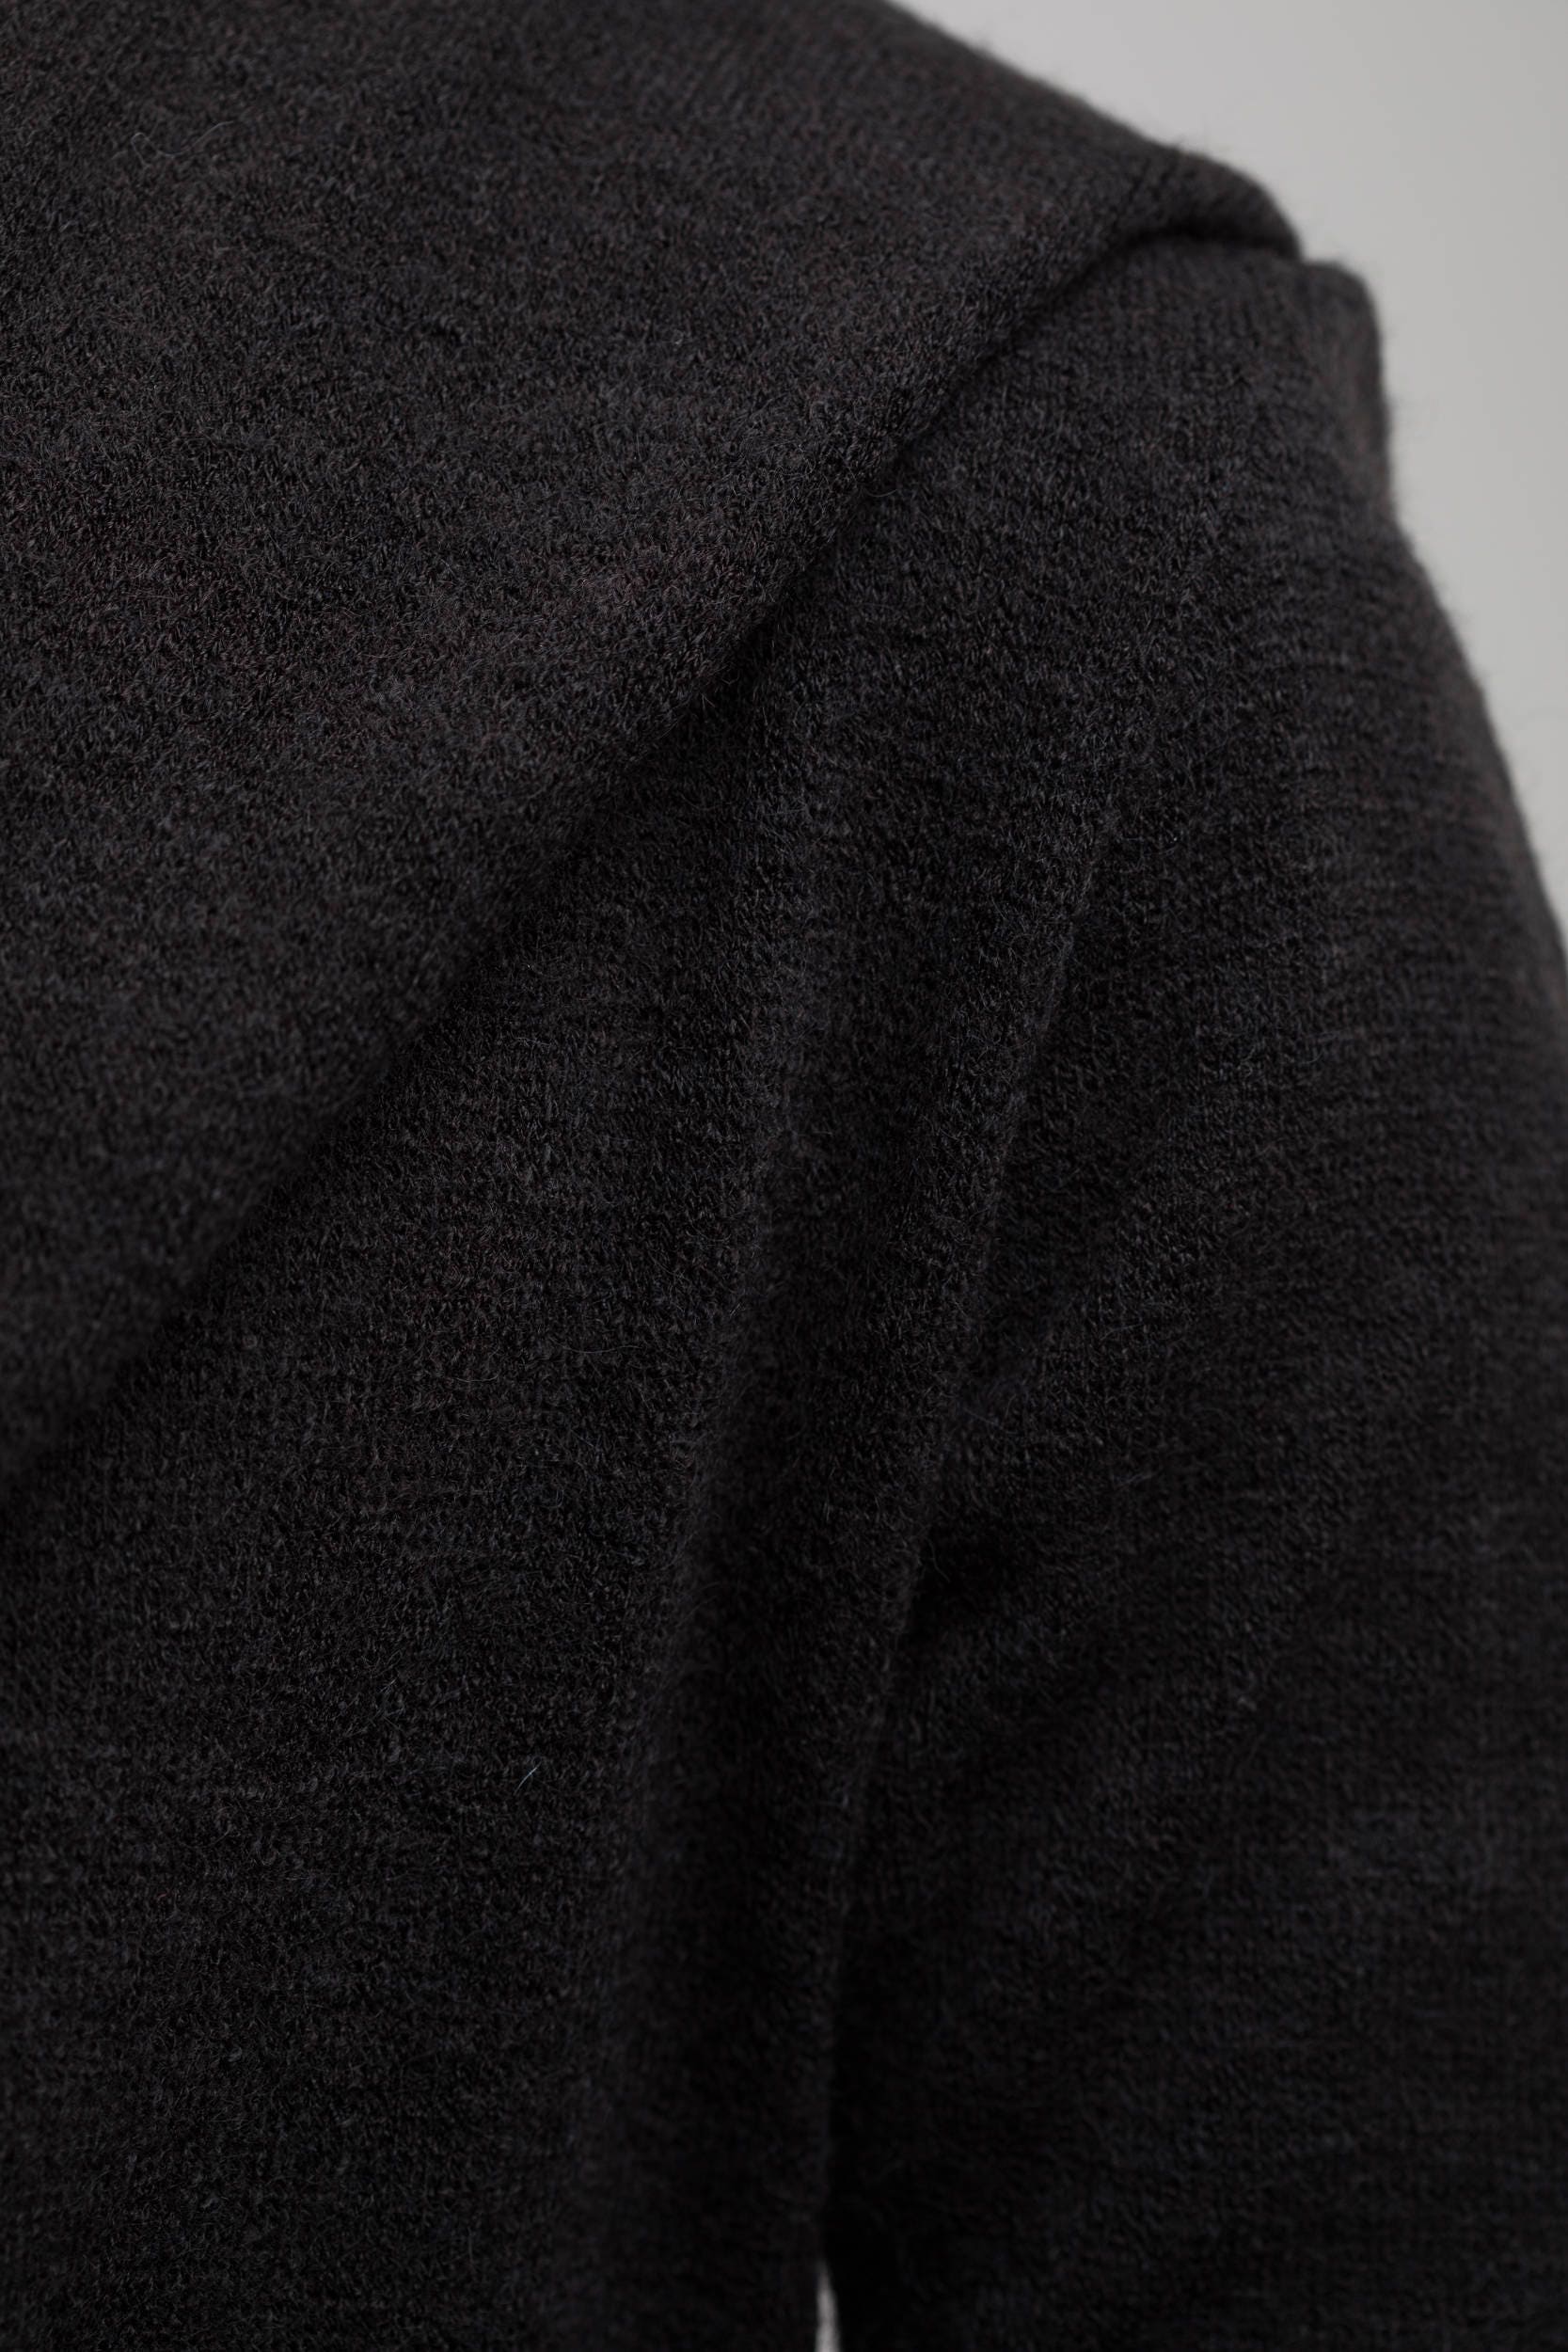 Cloak with hood oversized sweater cardigan black long cape | Etsy